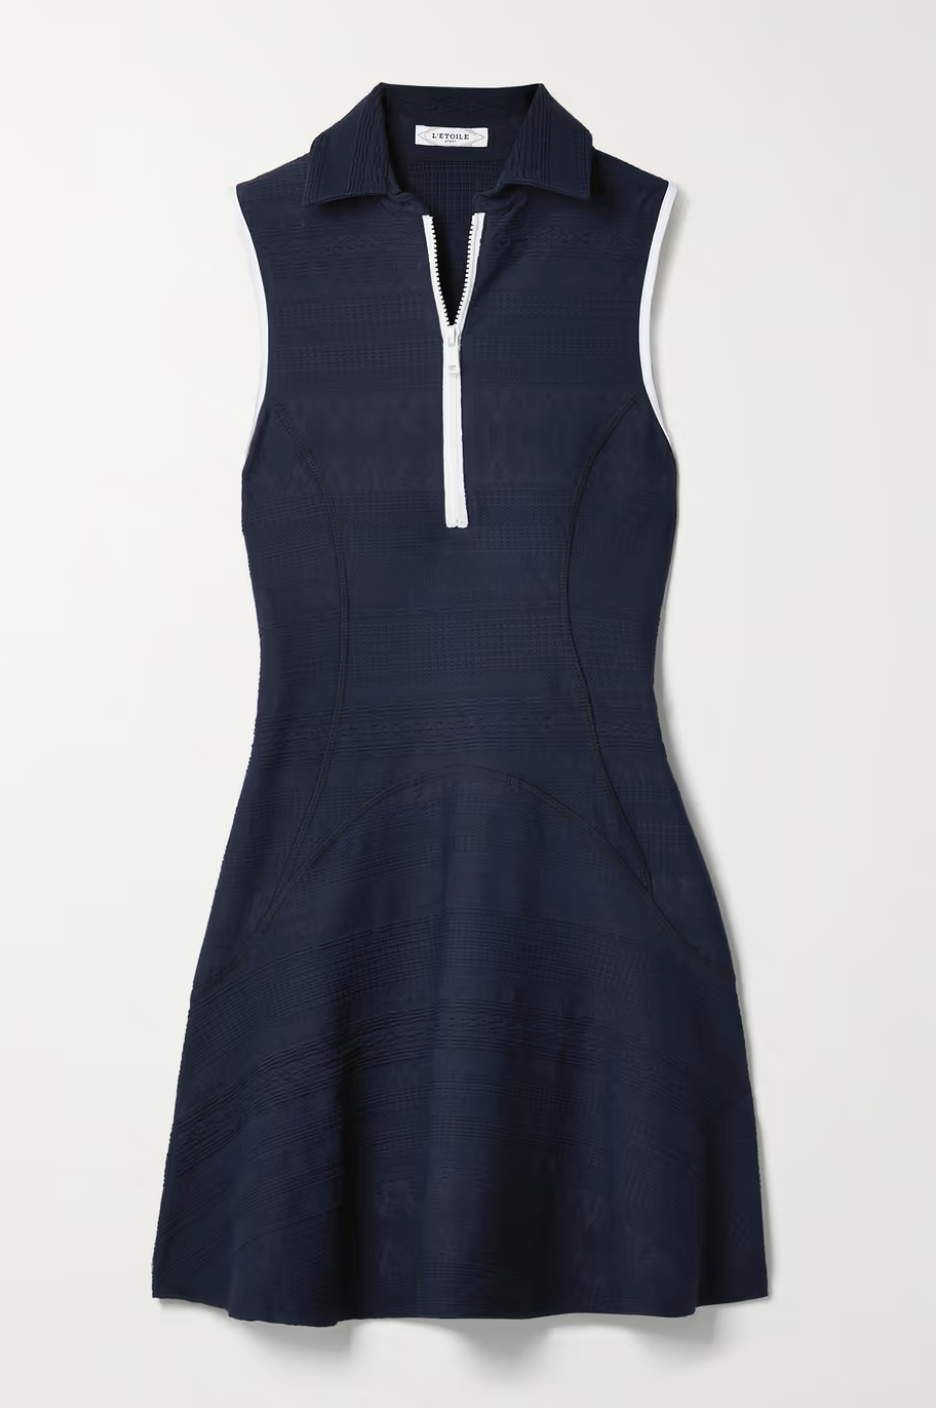 L'ETOILE SPORT Tennis Dress